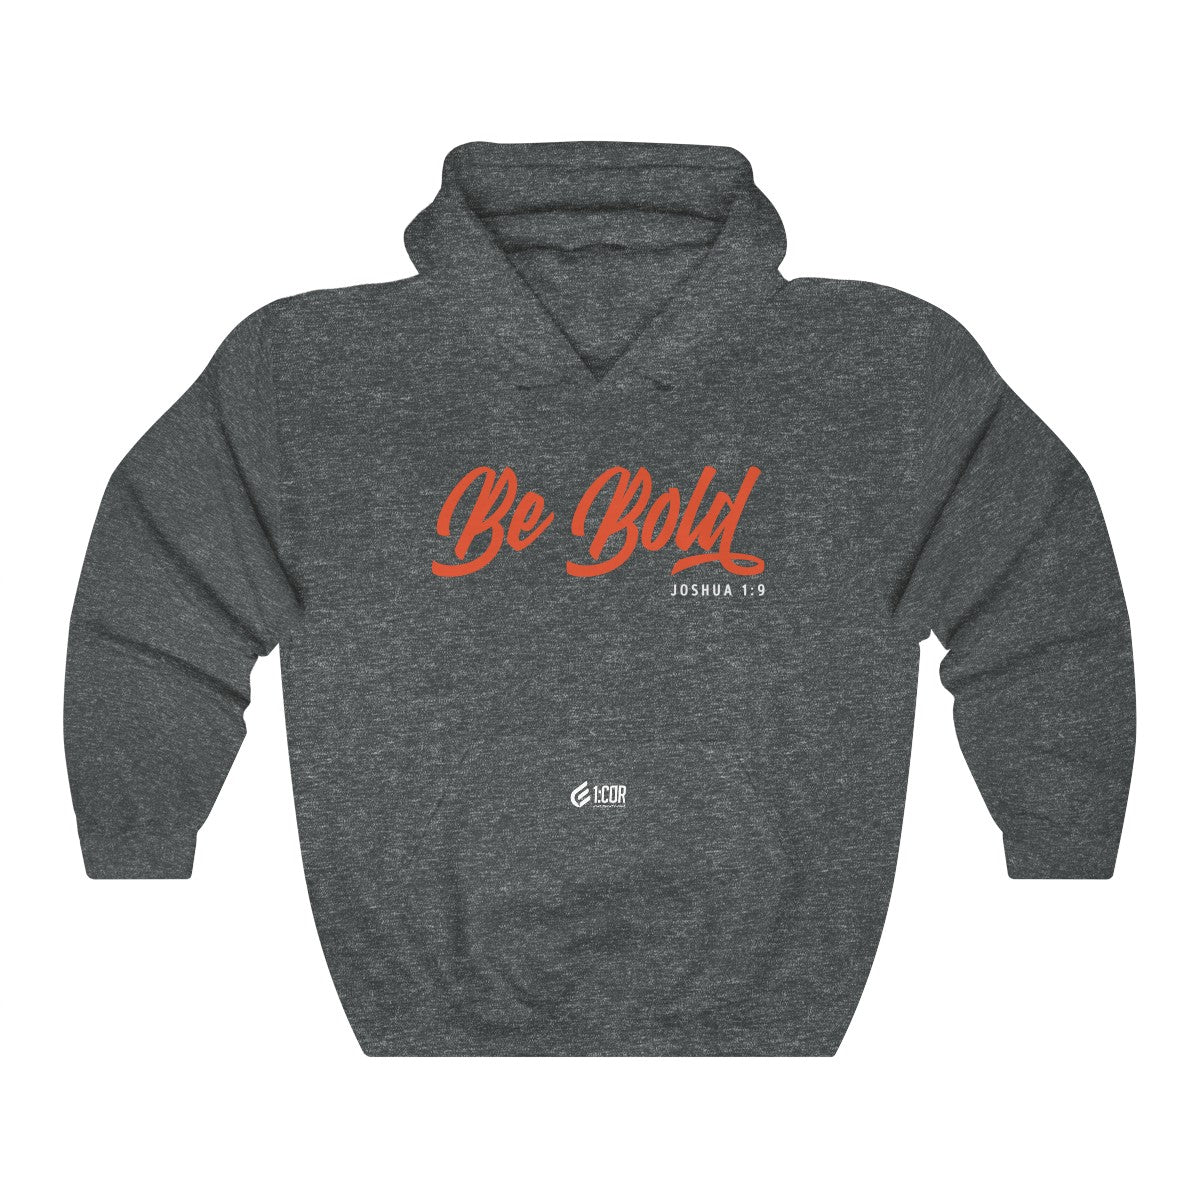 Be Bold | Hooded Sweatshirt